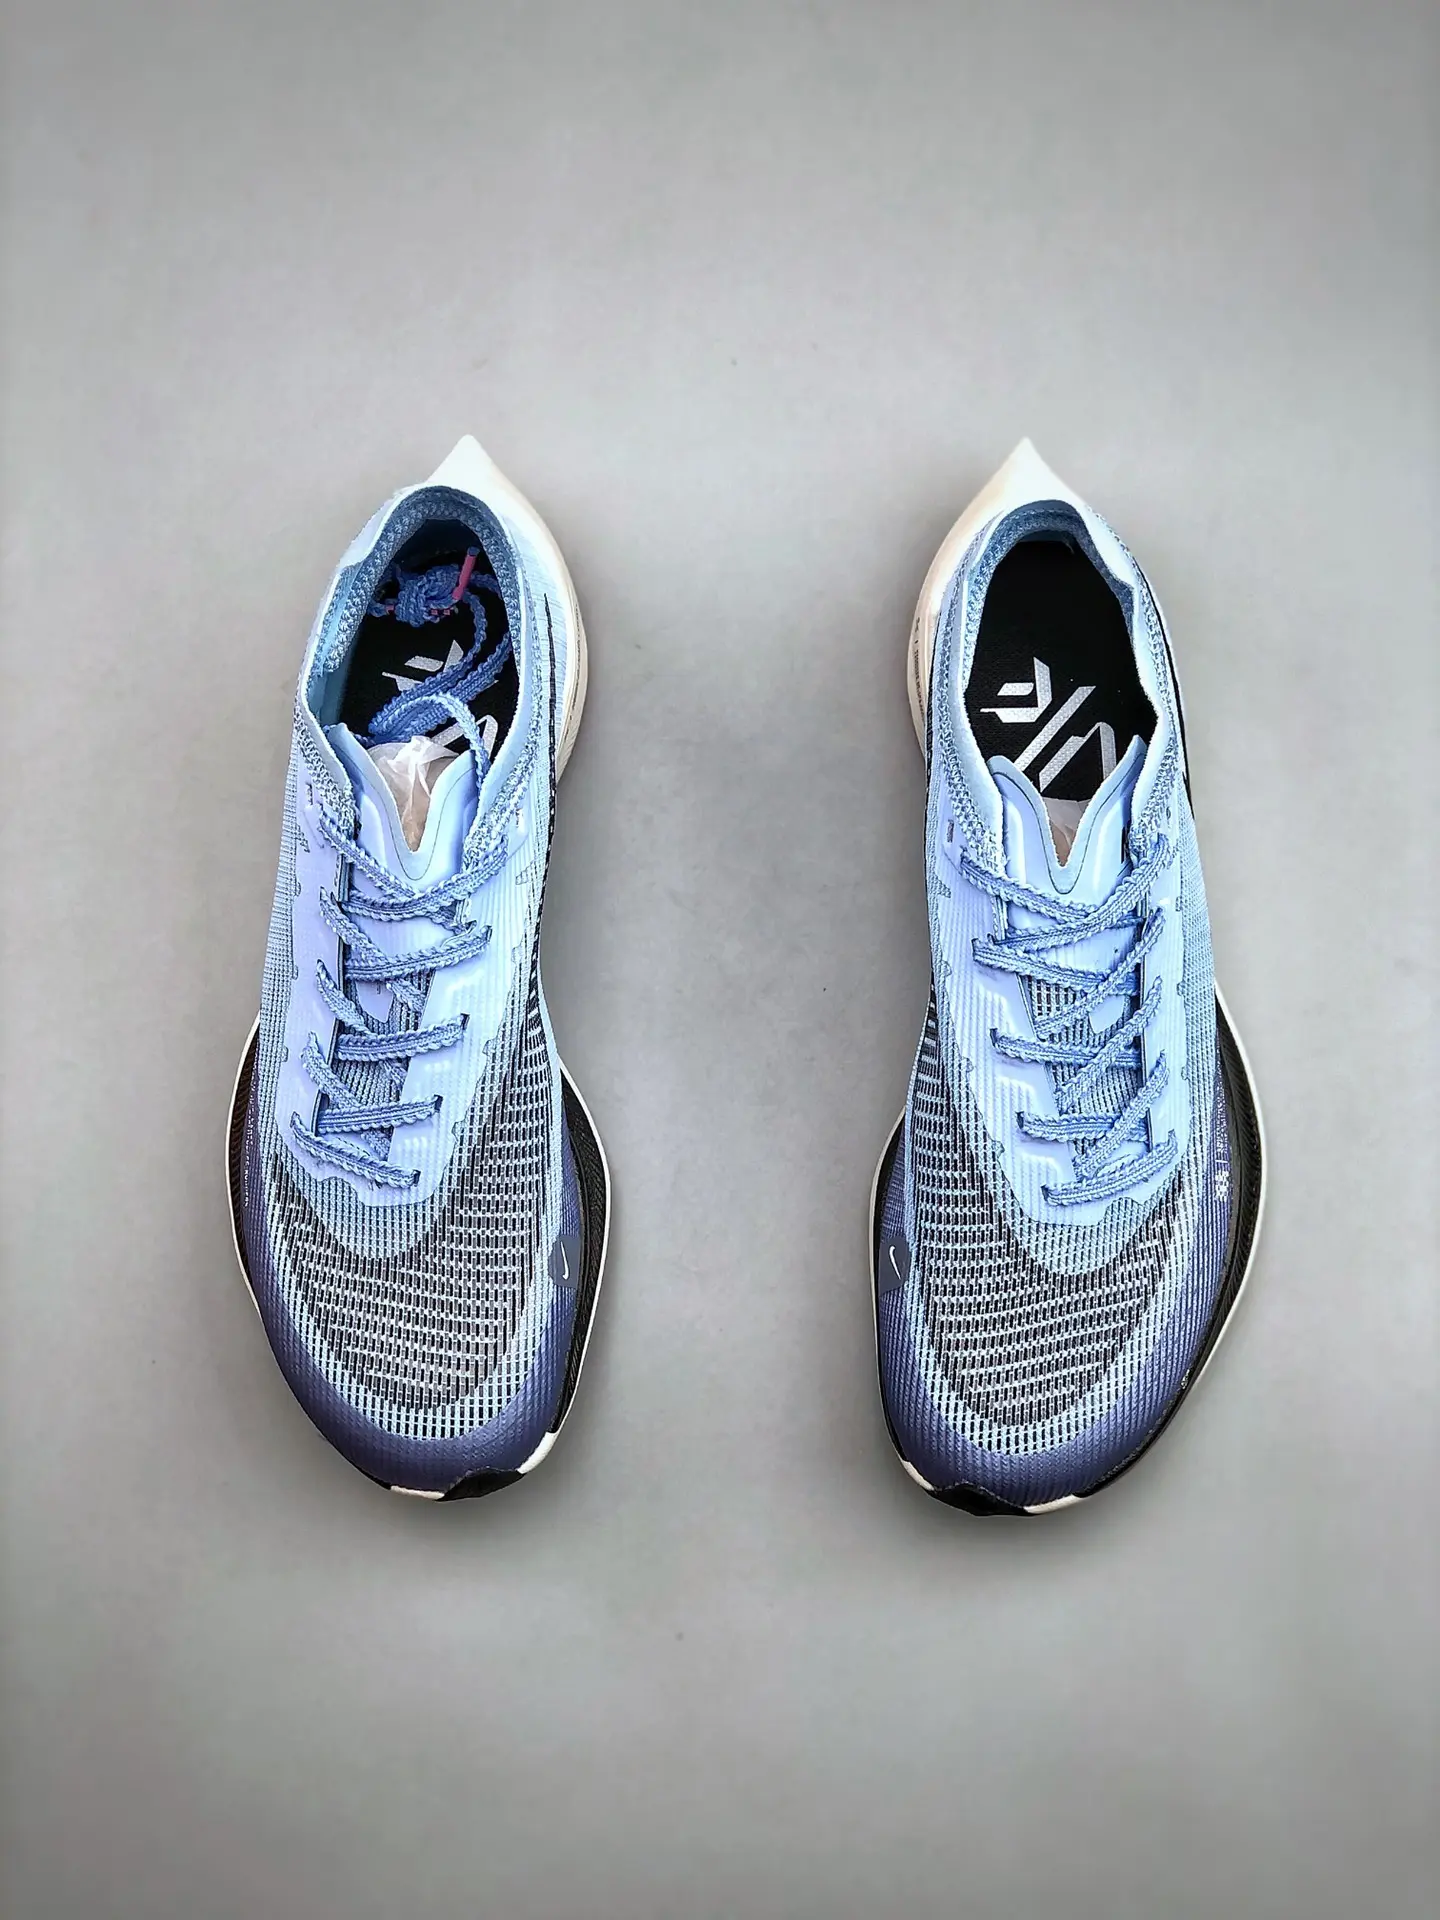 YASSW | Nike Alphafly vs Vaporfly: Unleashing Speed in Running Shoes